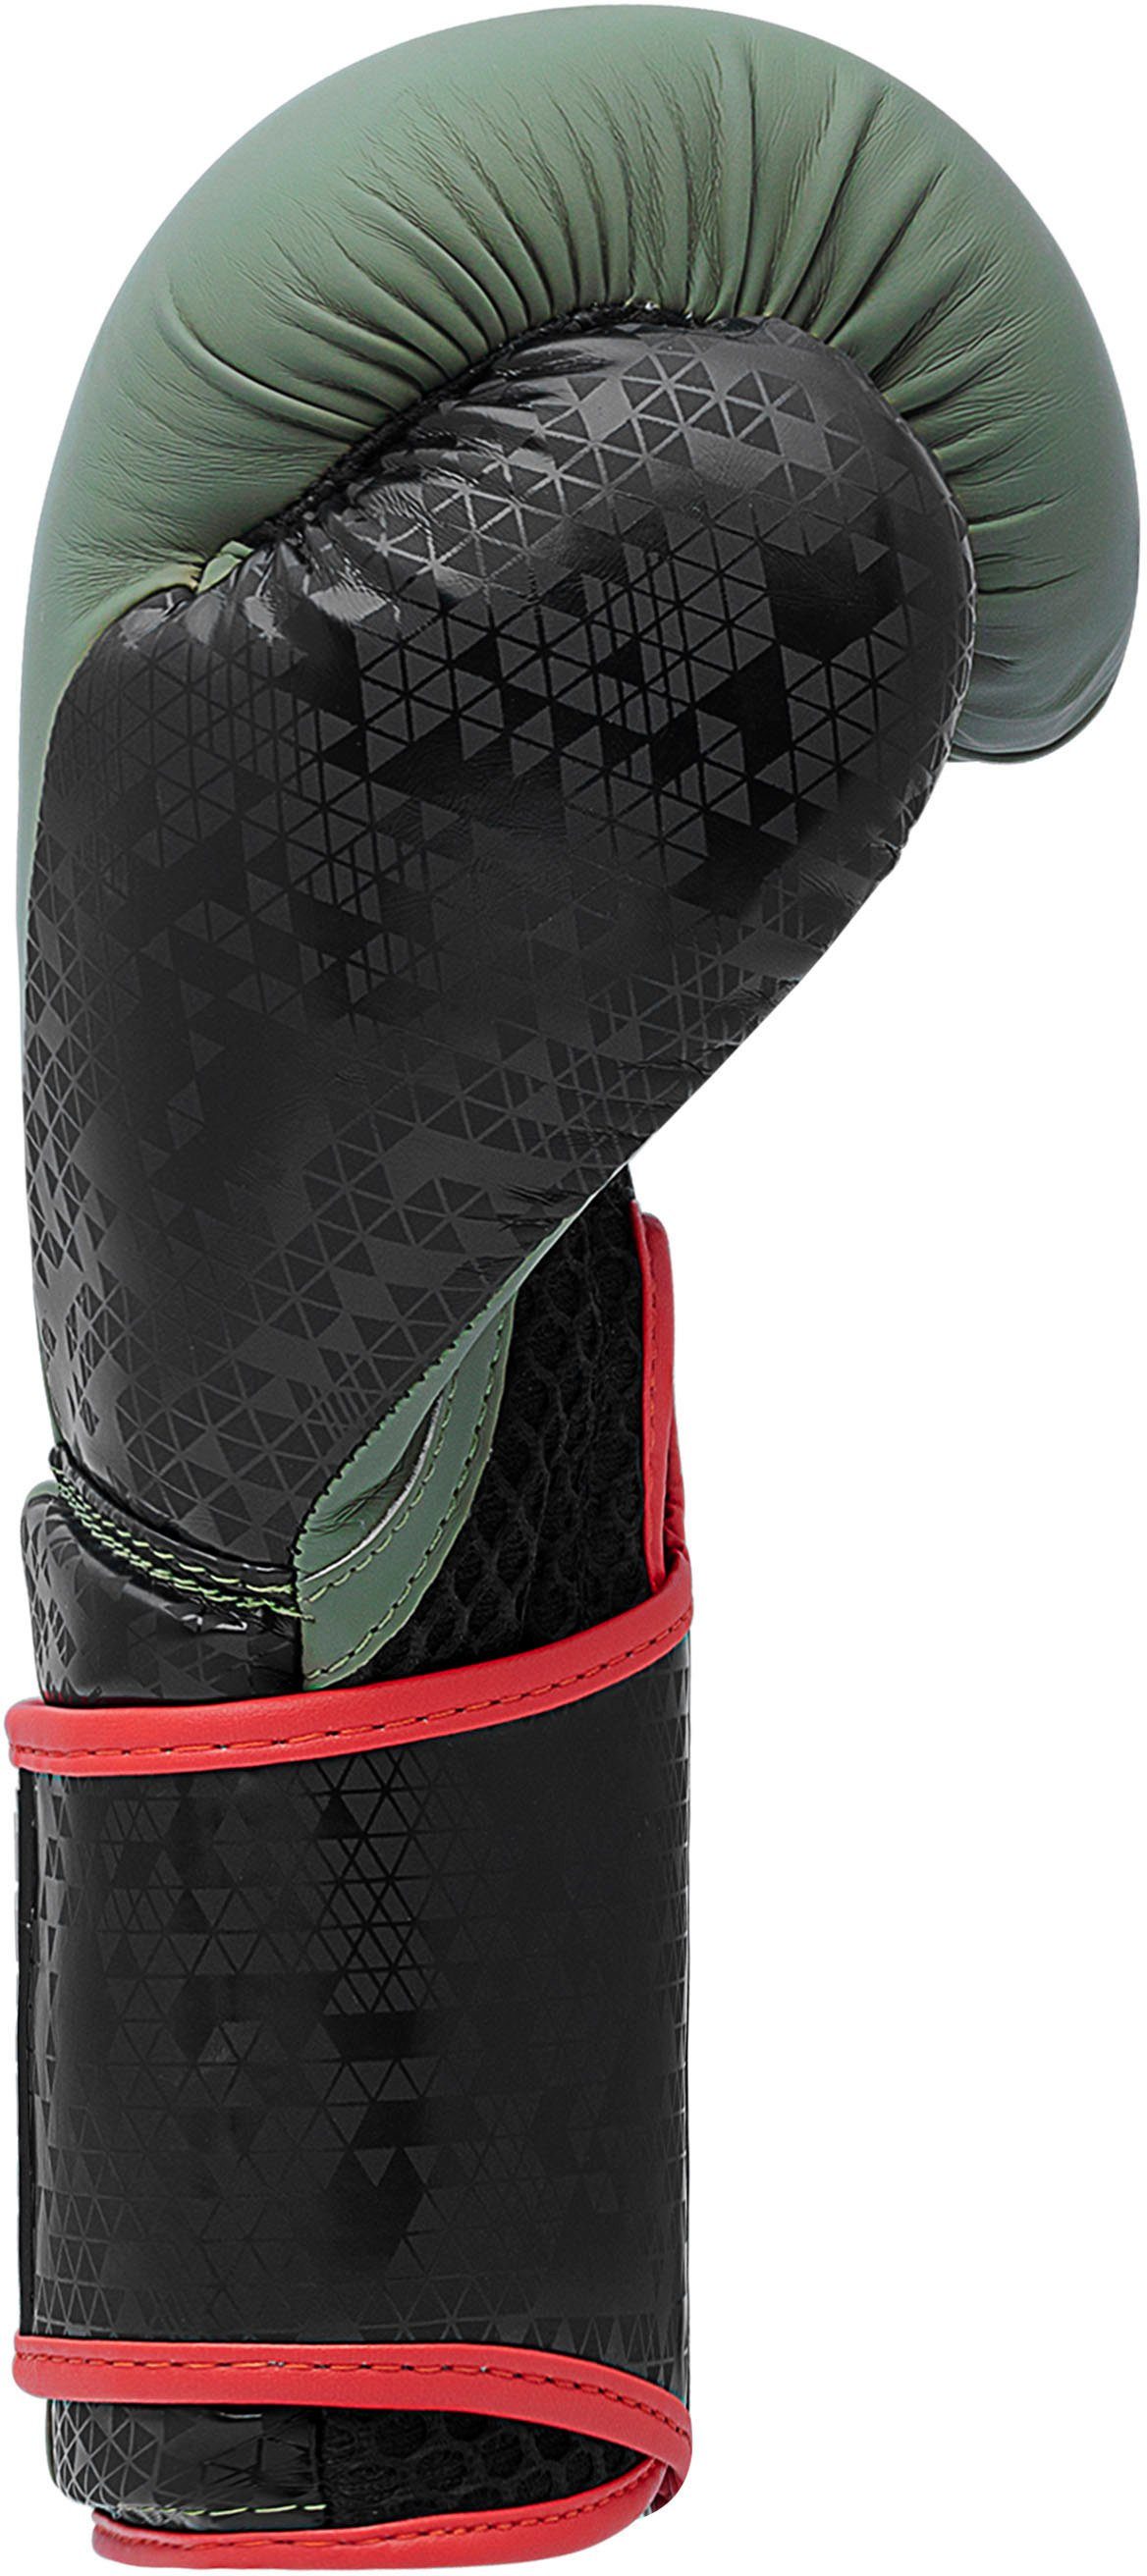 Combat olivgrün/schwarz Boxhandschuhe 50 adidas Performance